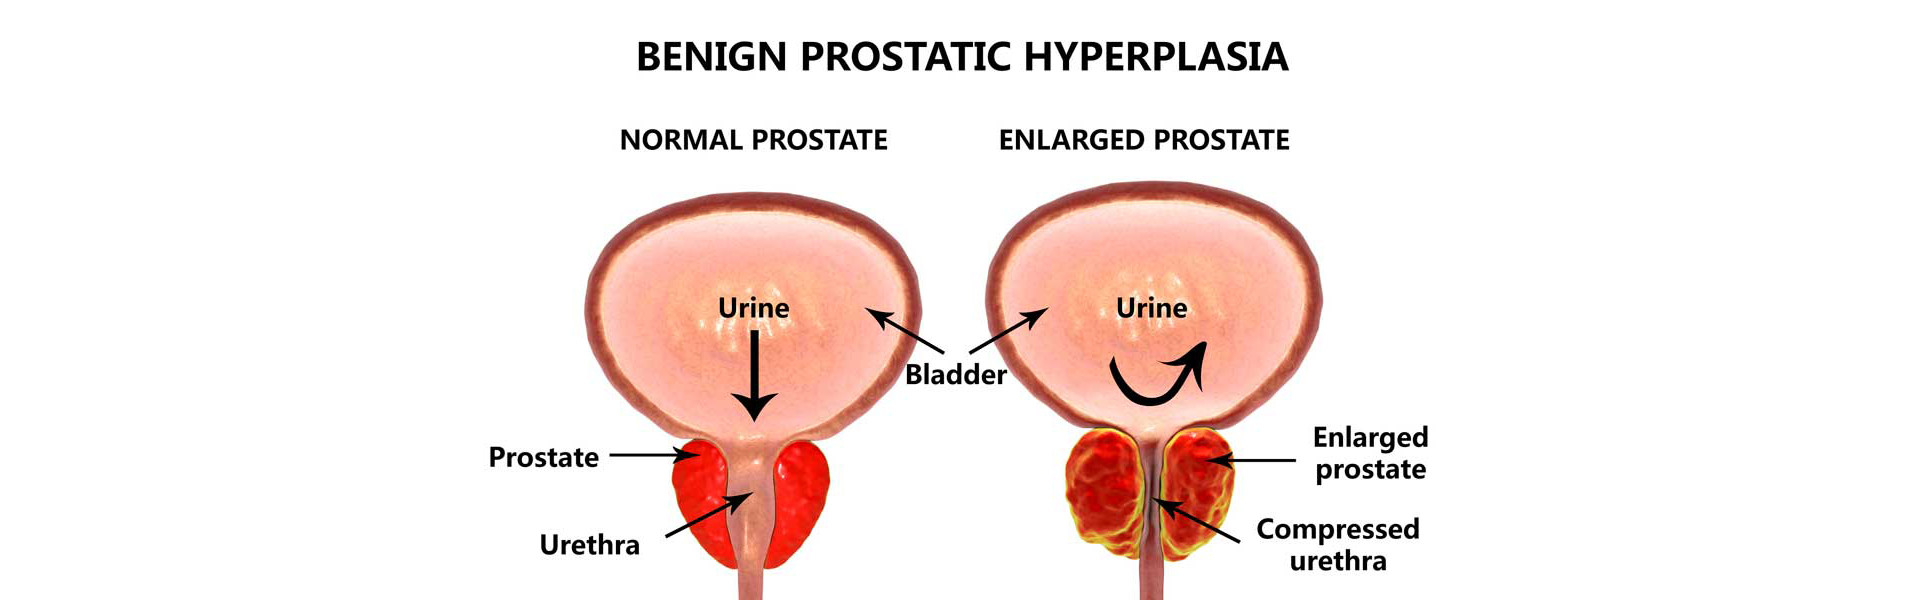 unilateral prostate enlargement